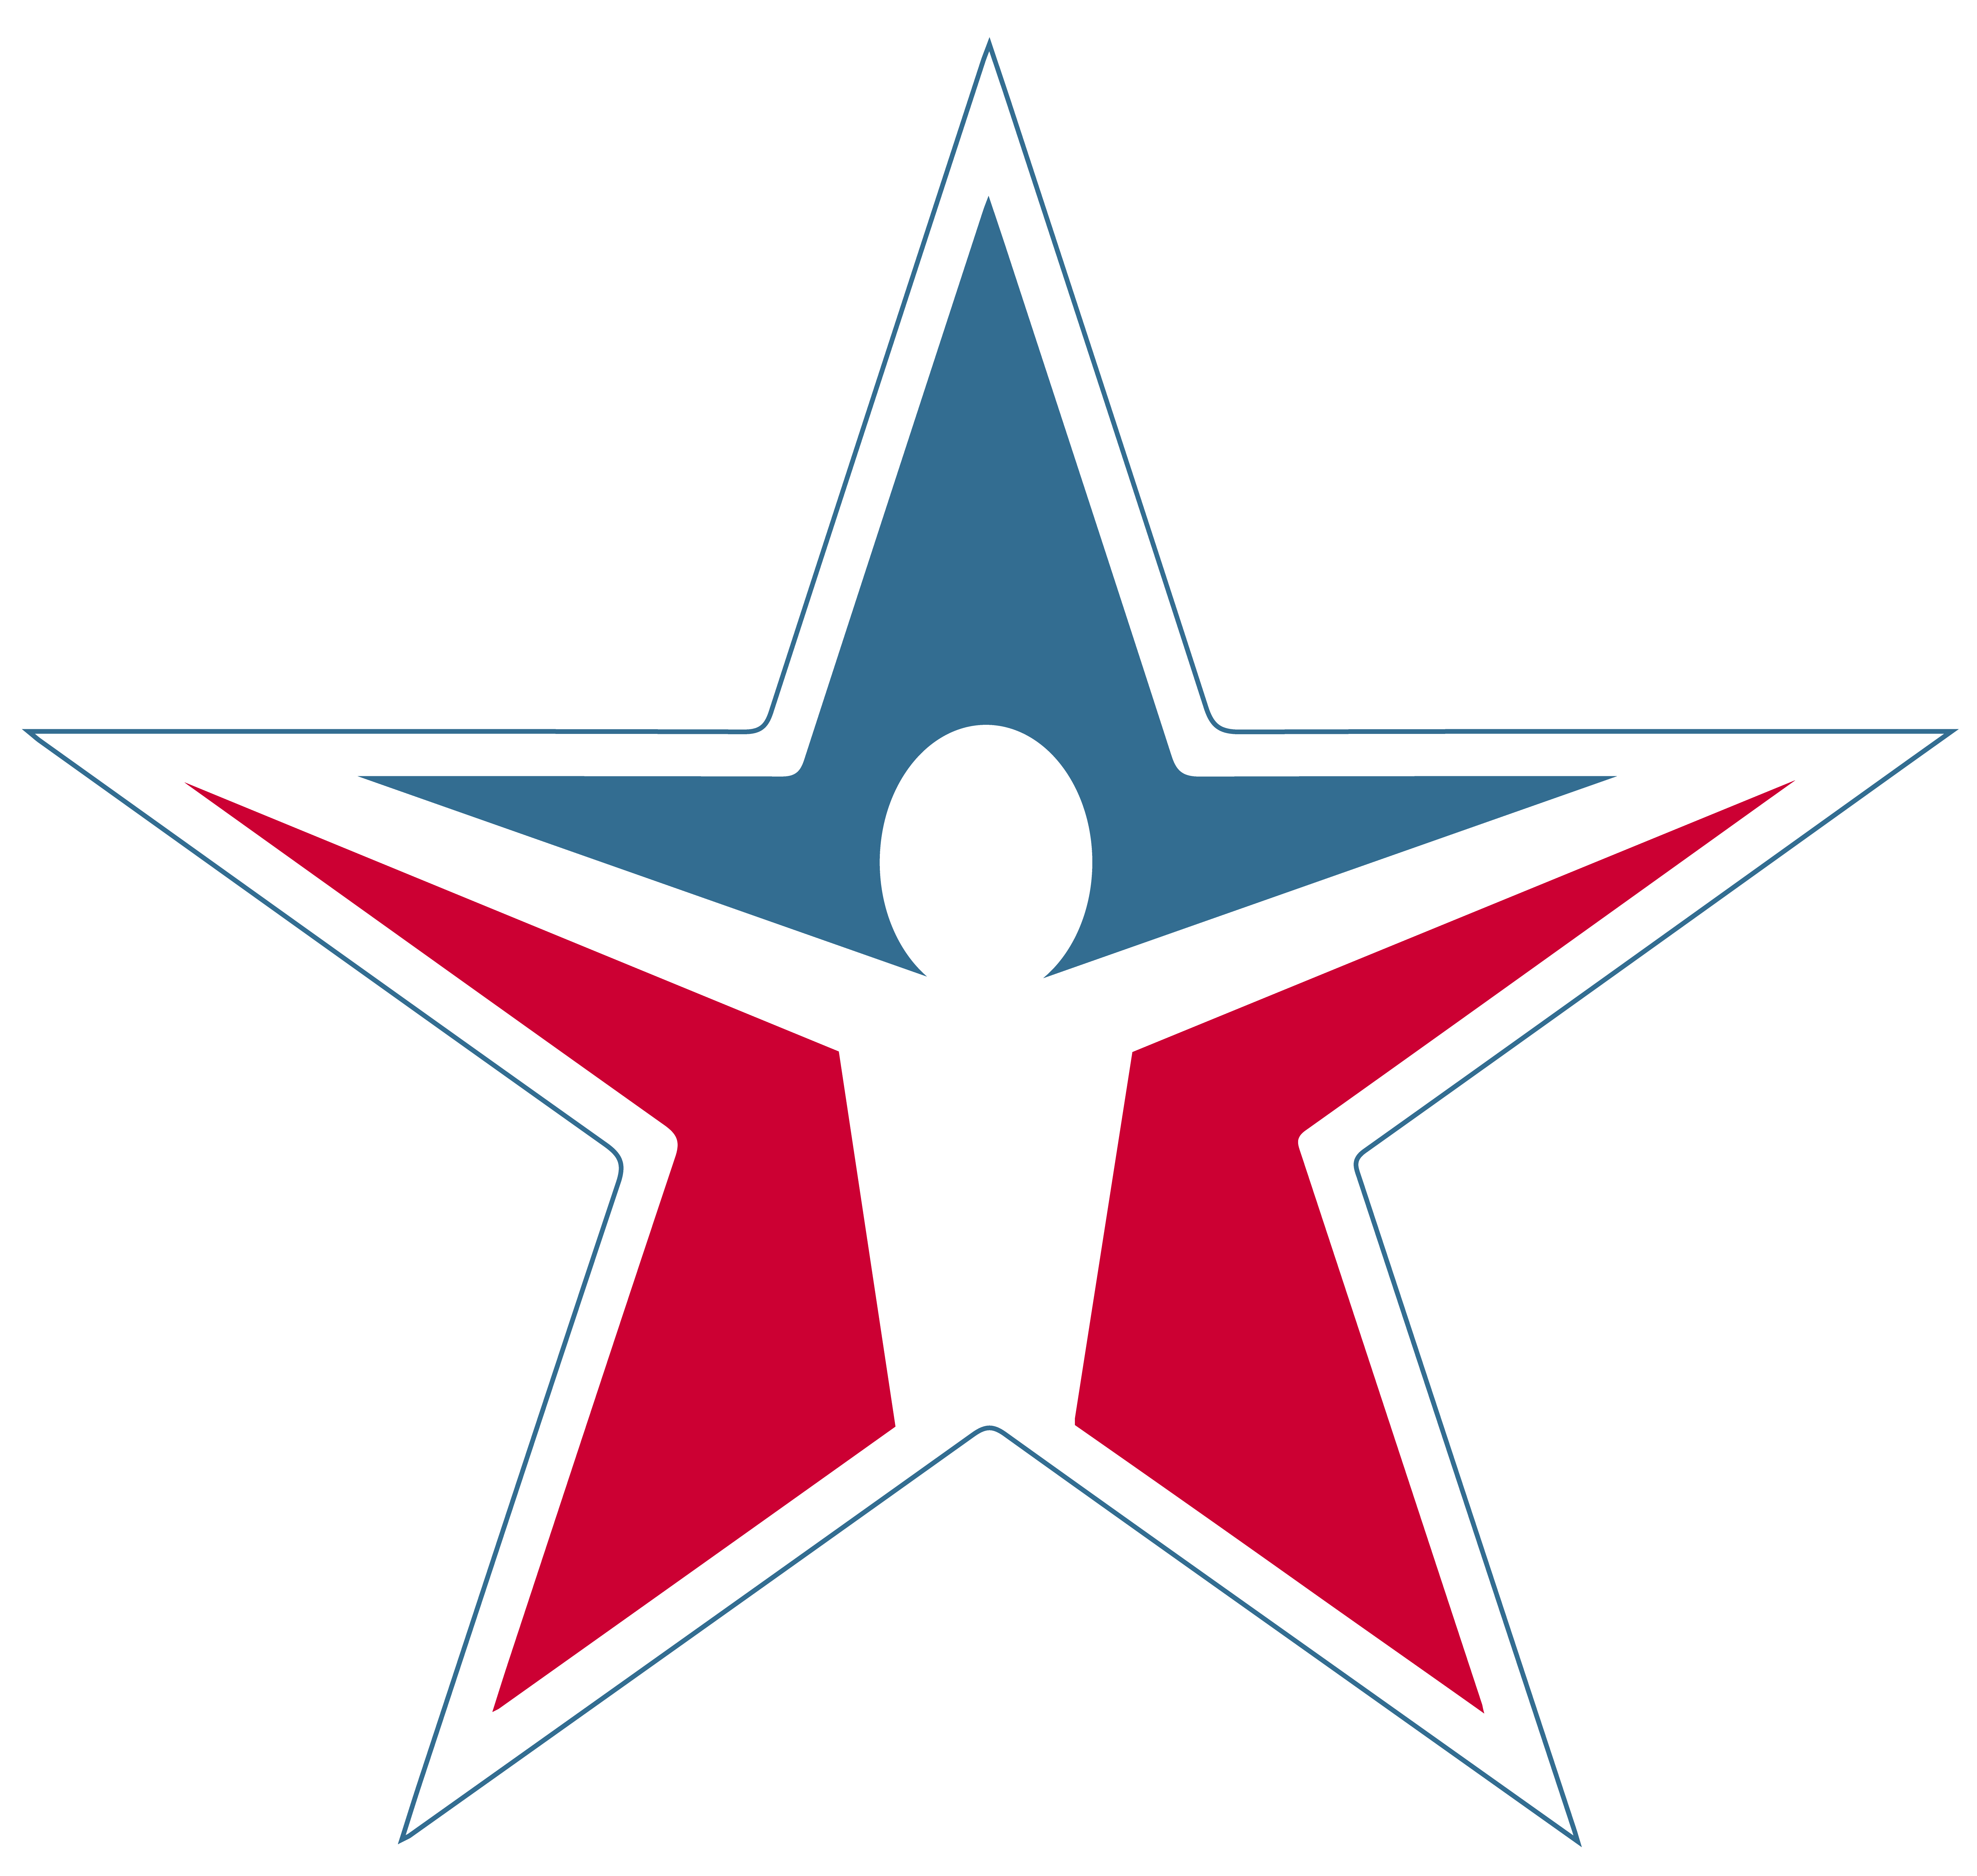 Tomorrow's Team Inc logo